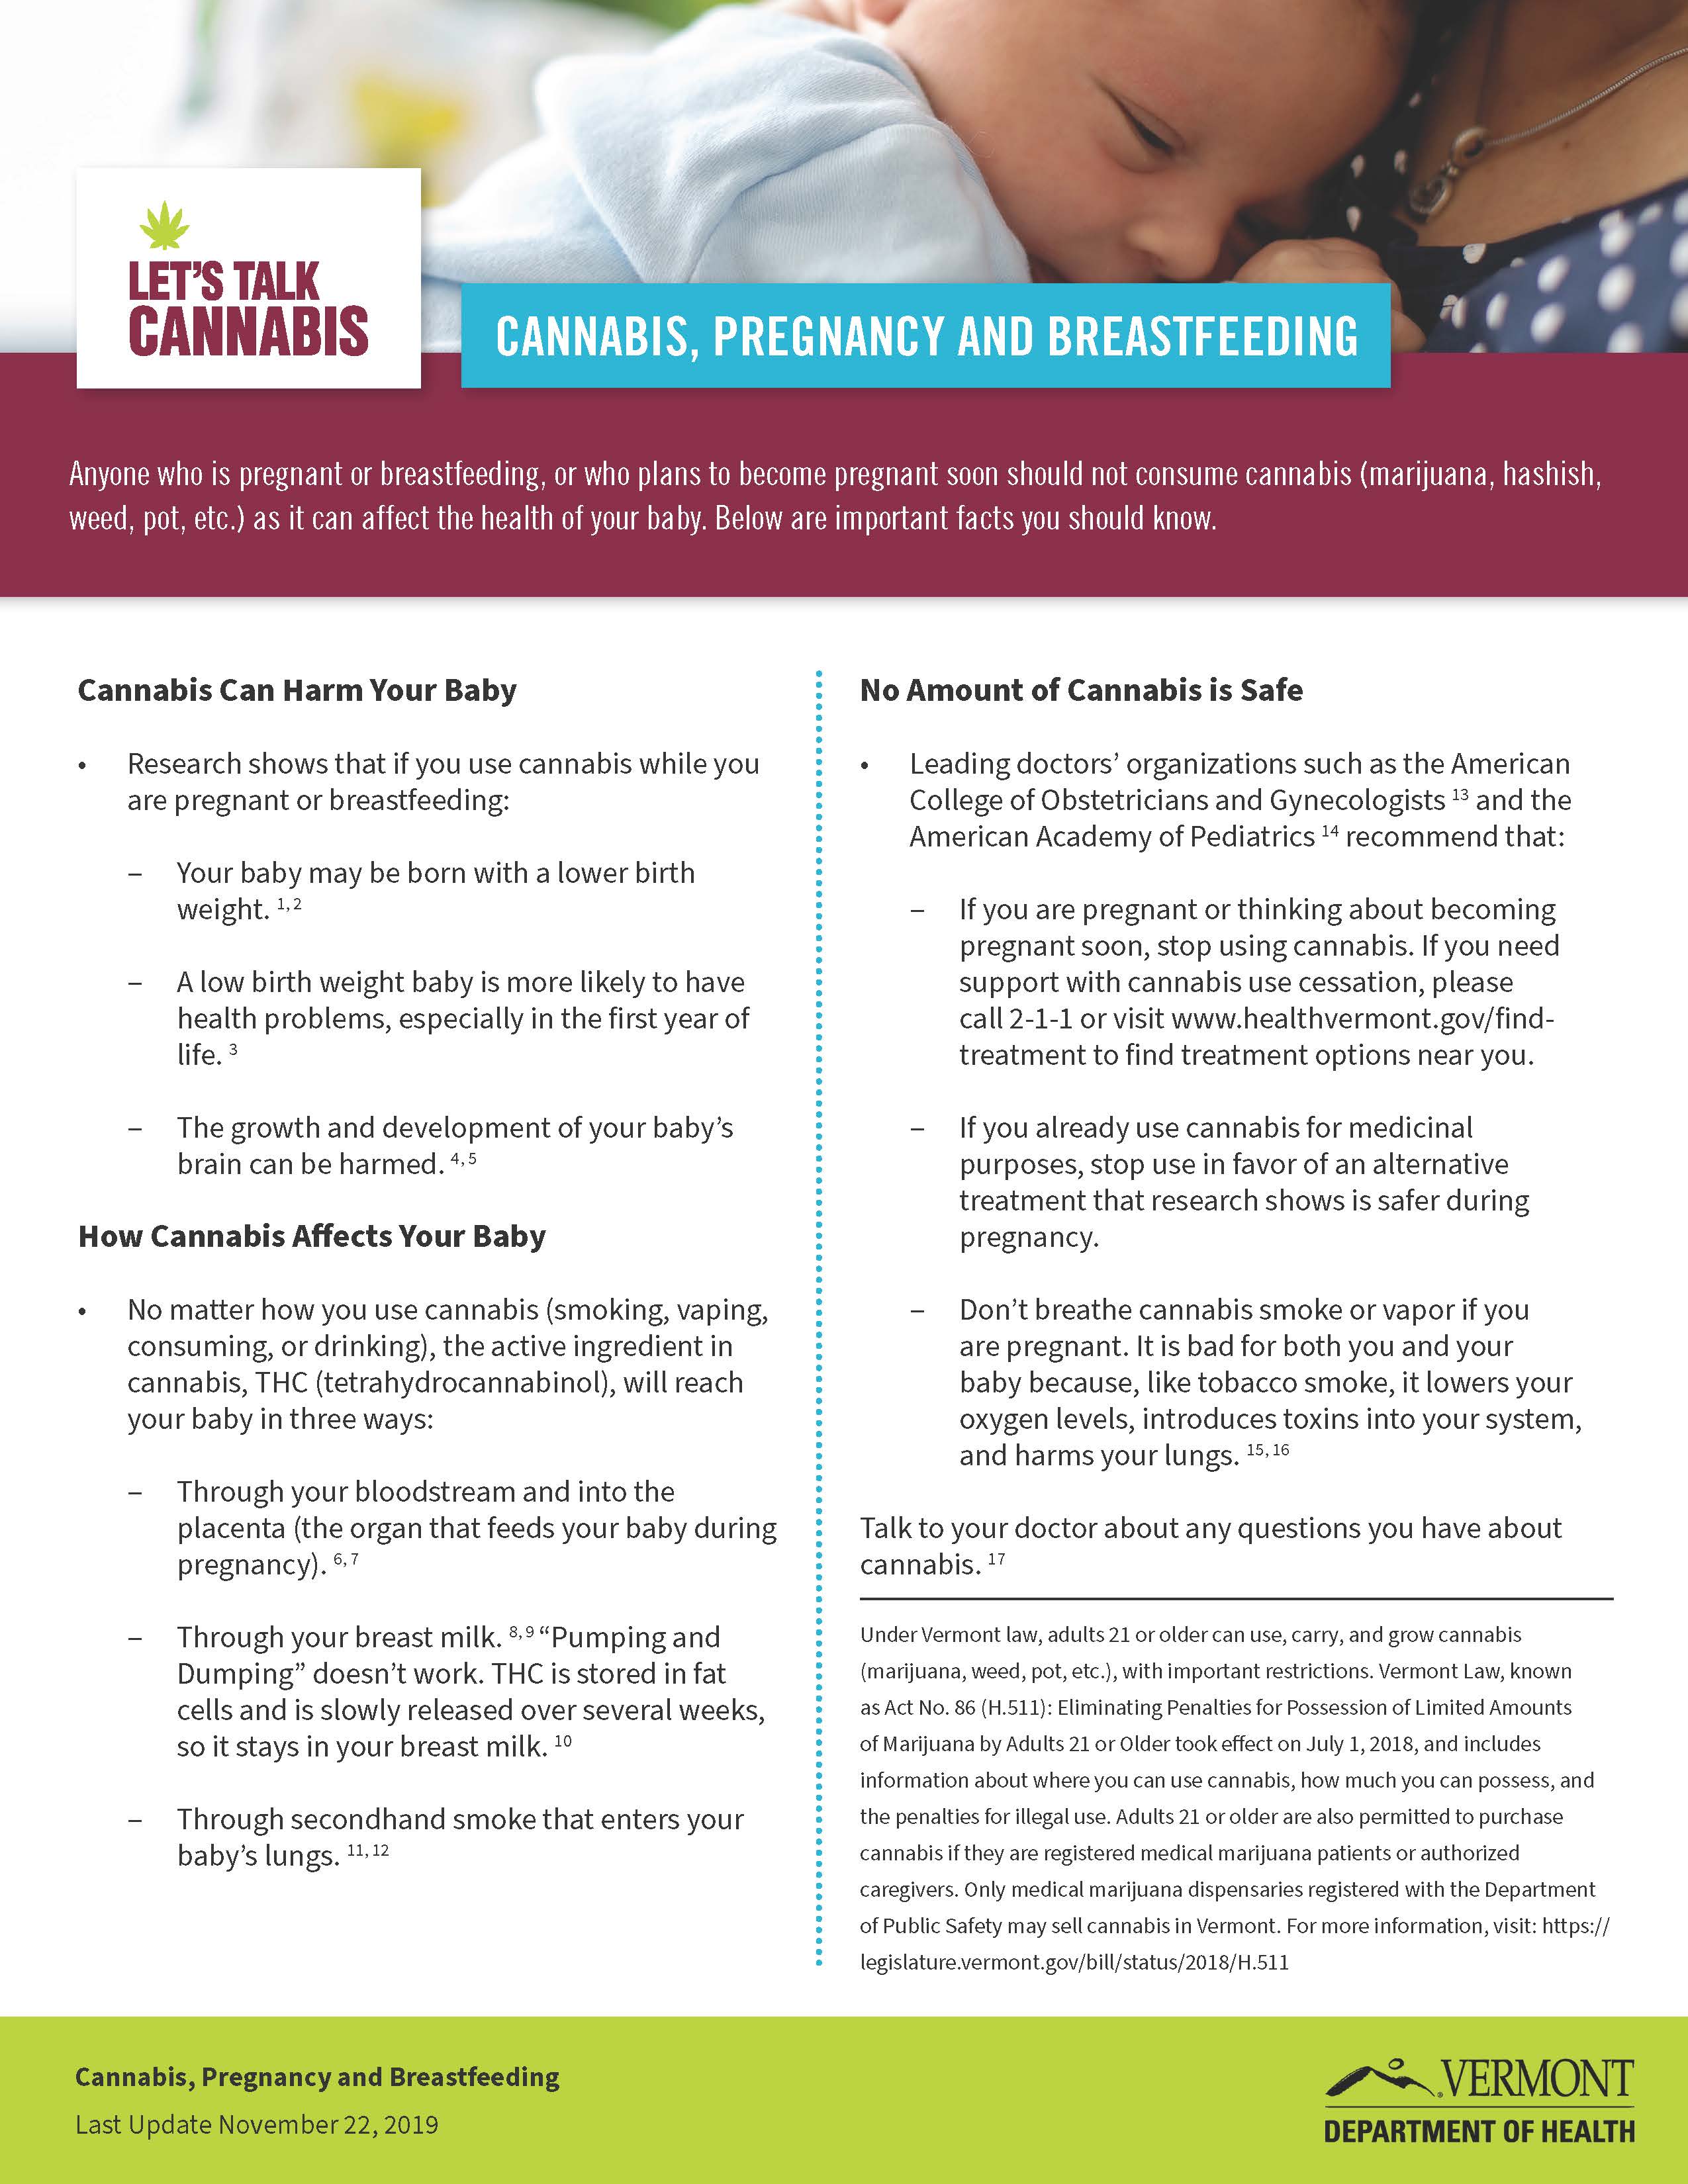 Let's Talk Cannabis pregnancy fact sheet